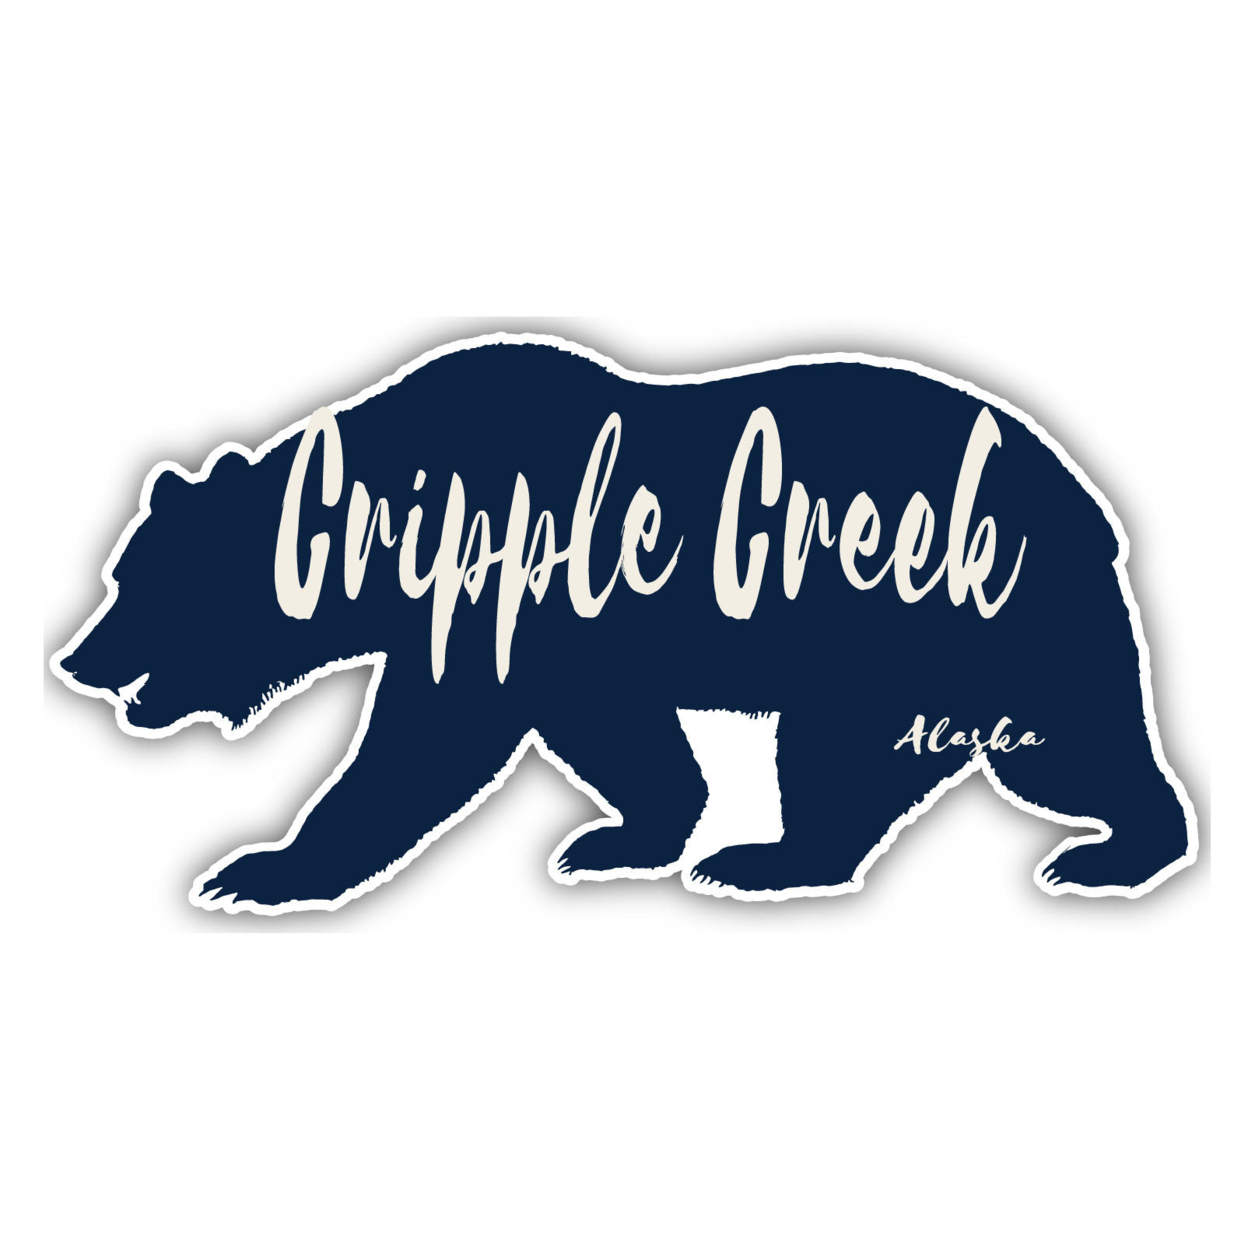 Cripple Creek Alaska Souvenir Decorative Stickers (Choose Theme And Size) - Single Unit, 12-Inch, Bear